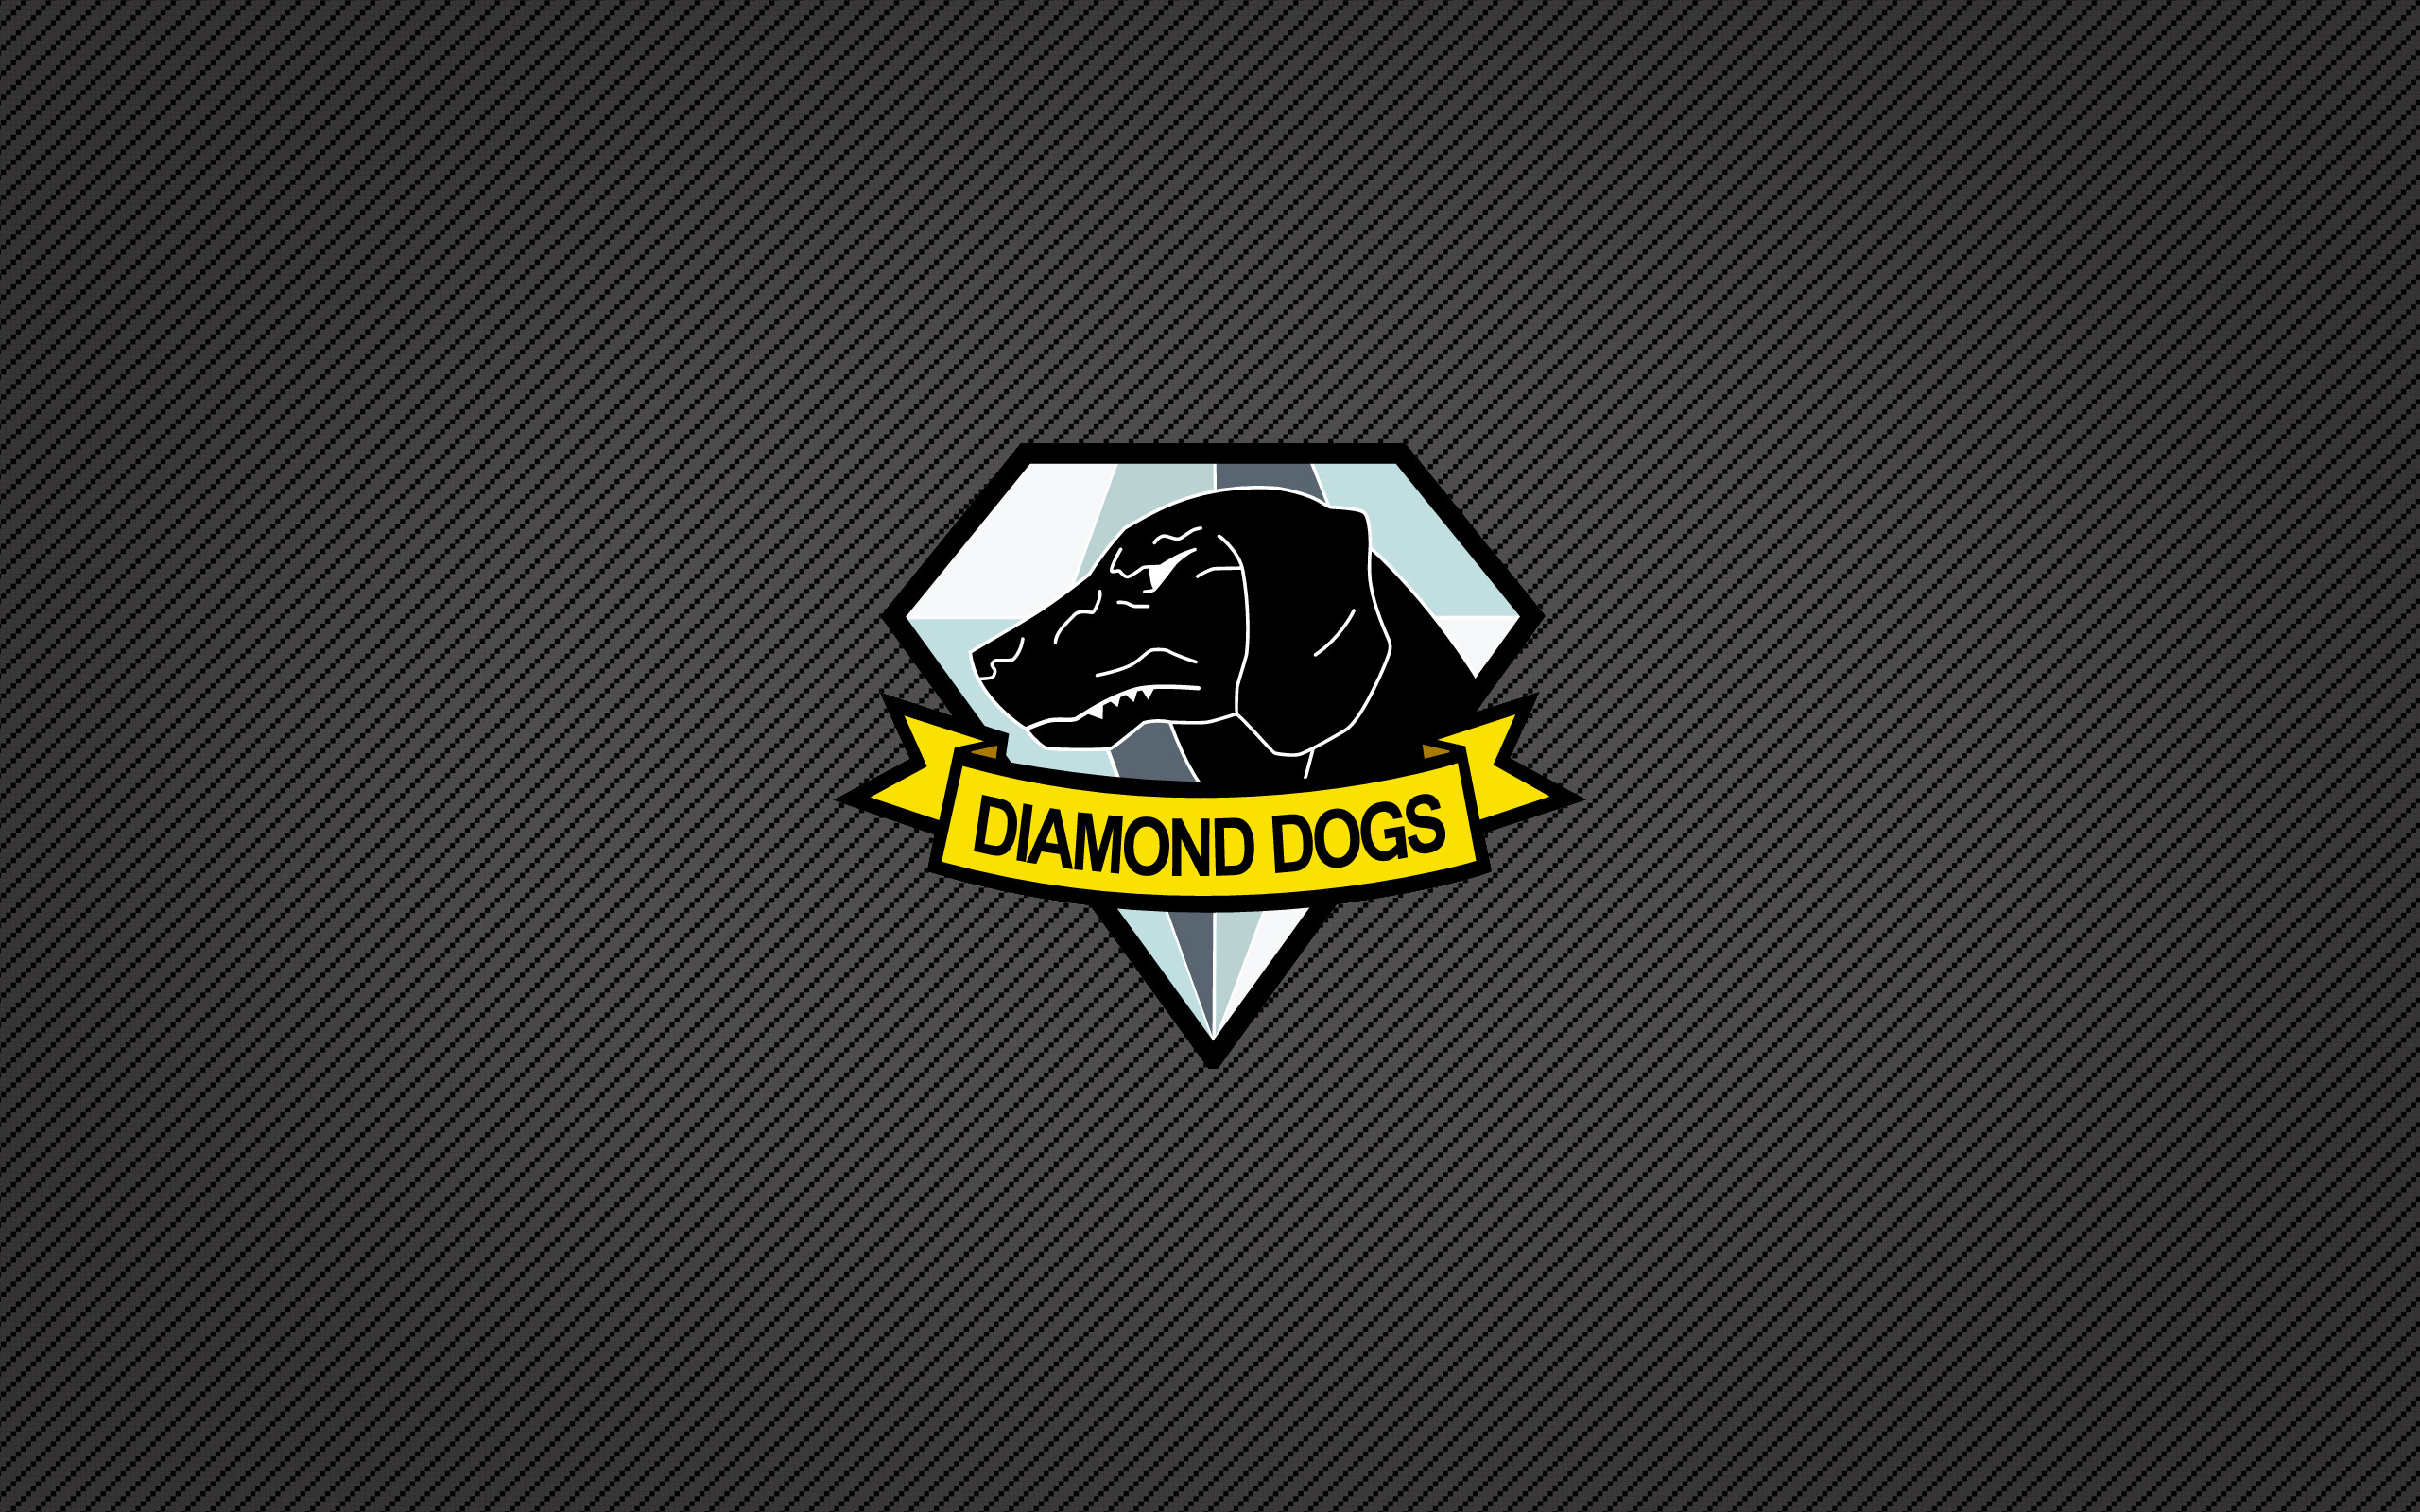 Diamond Dogs HD Wallpaper Image